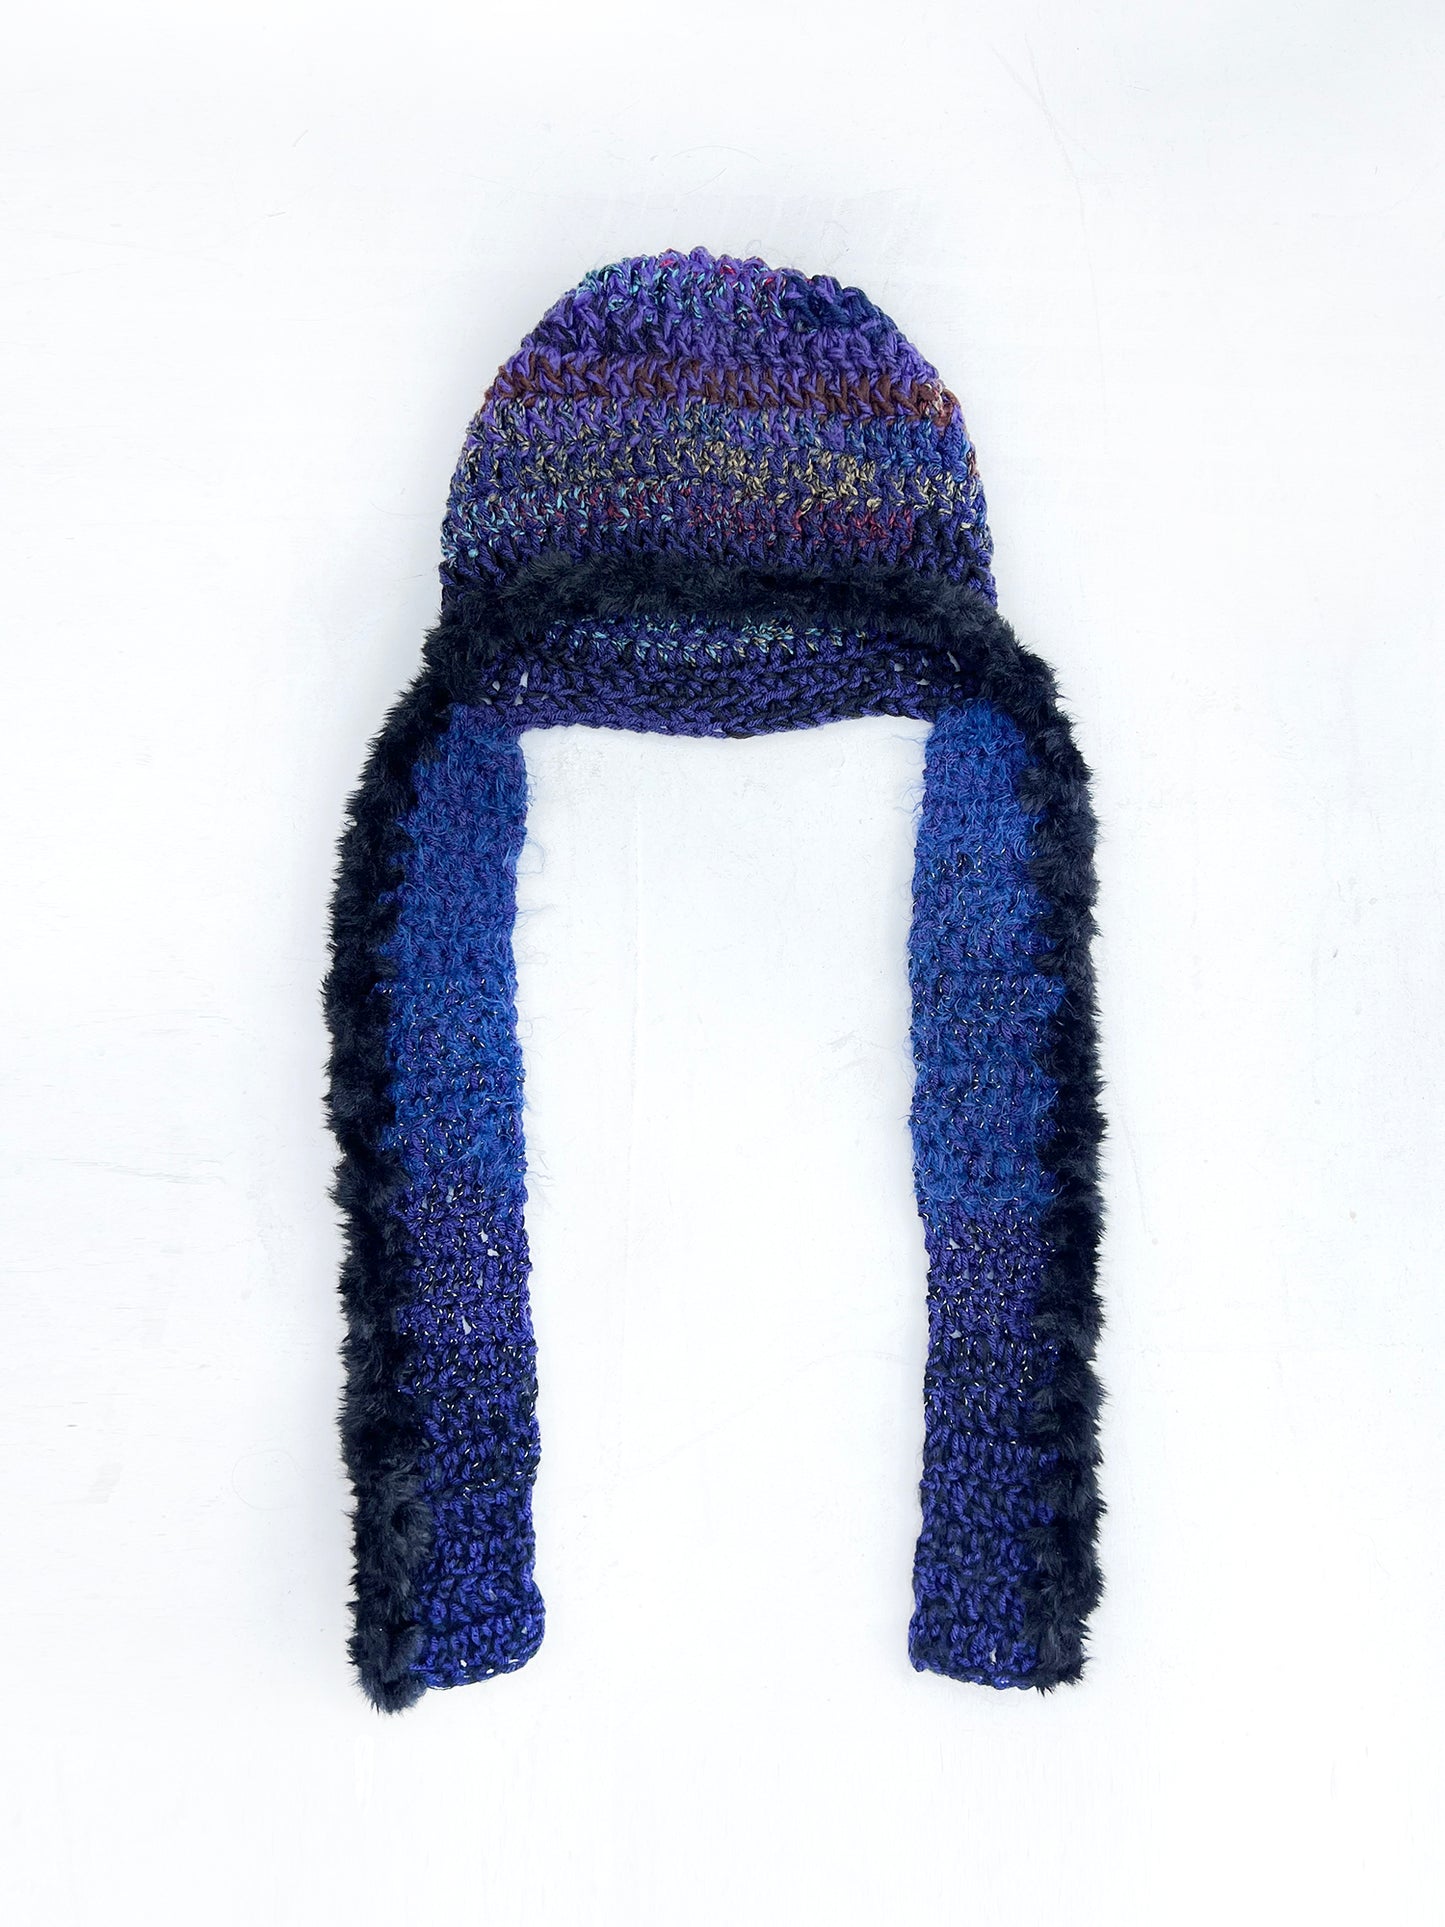 Cool Cat Crochet Hat #2 L/XL